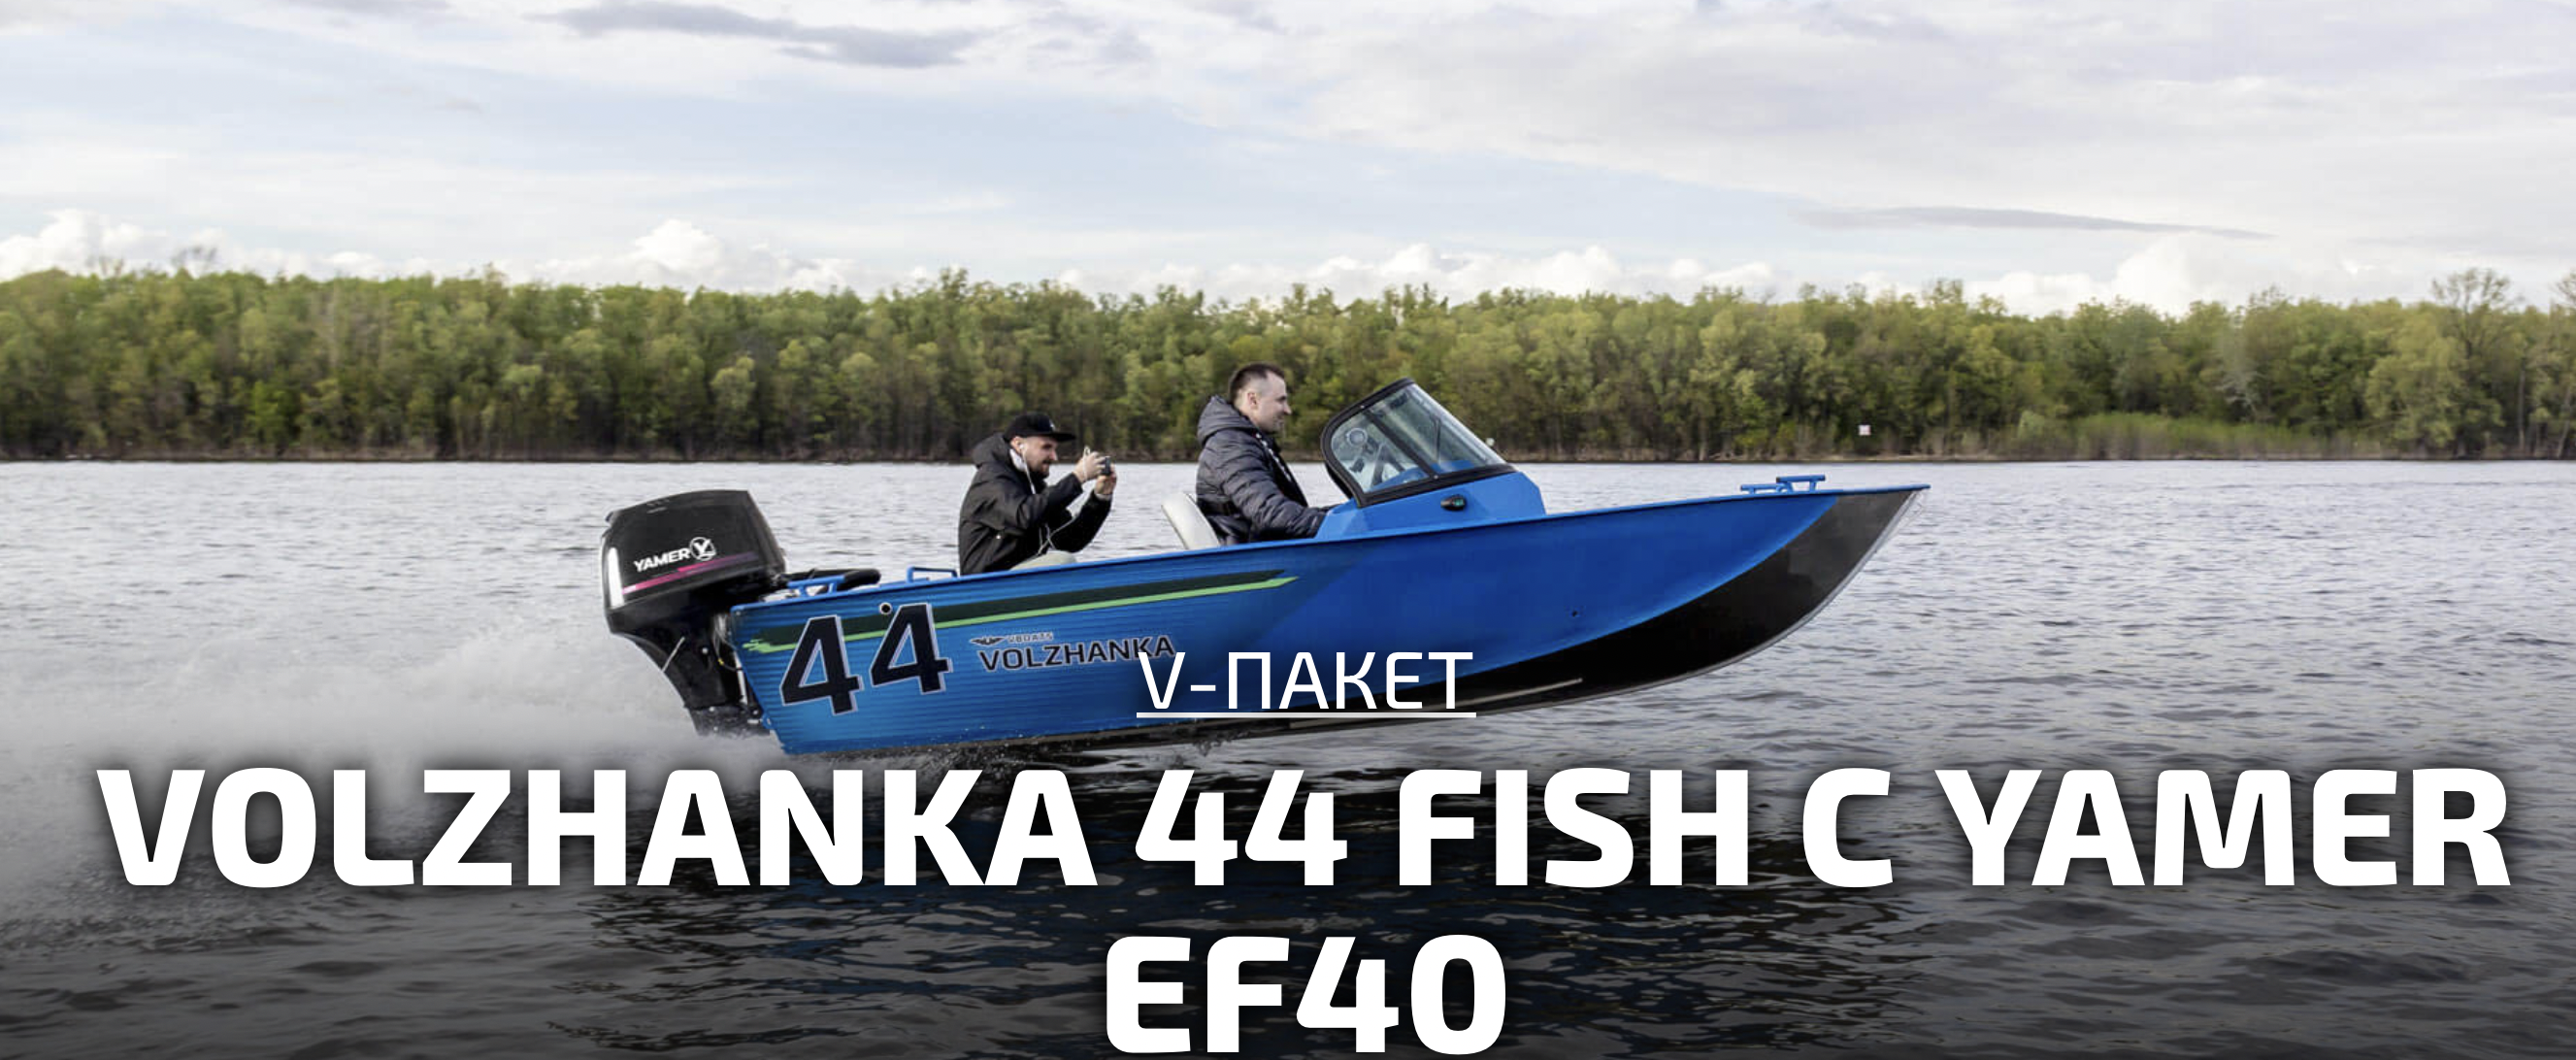 VOLZHANKA 44 FISH C YAMER EF40